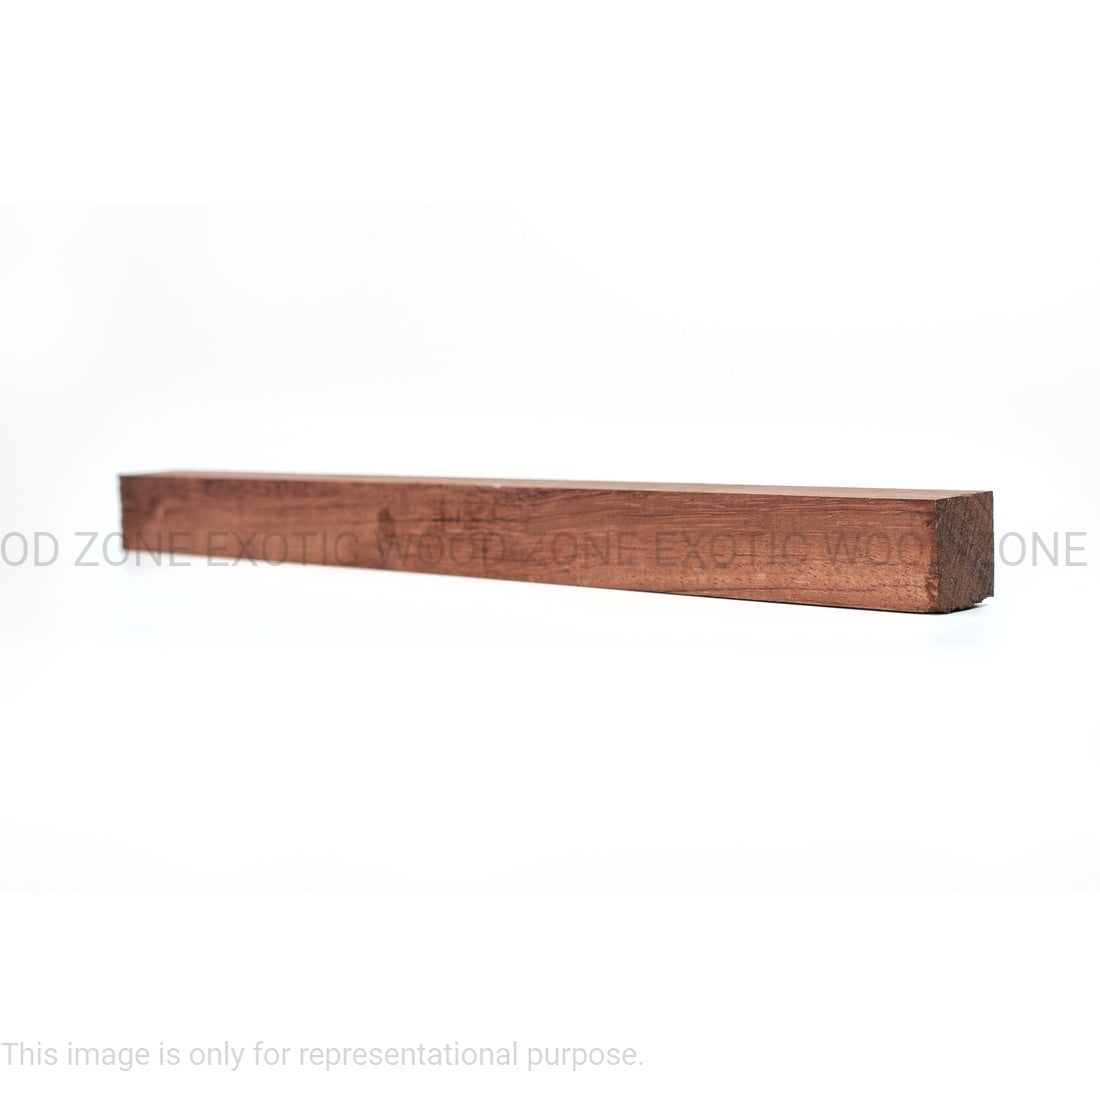 Pack Of 8 Bubinga Hardwood Turning Square Wood Blanks 1 x 1 x 12 inches - Exotic Wood Zone - Buy online Across USA 